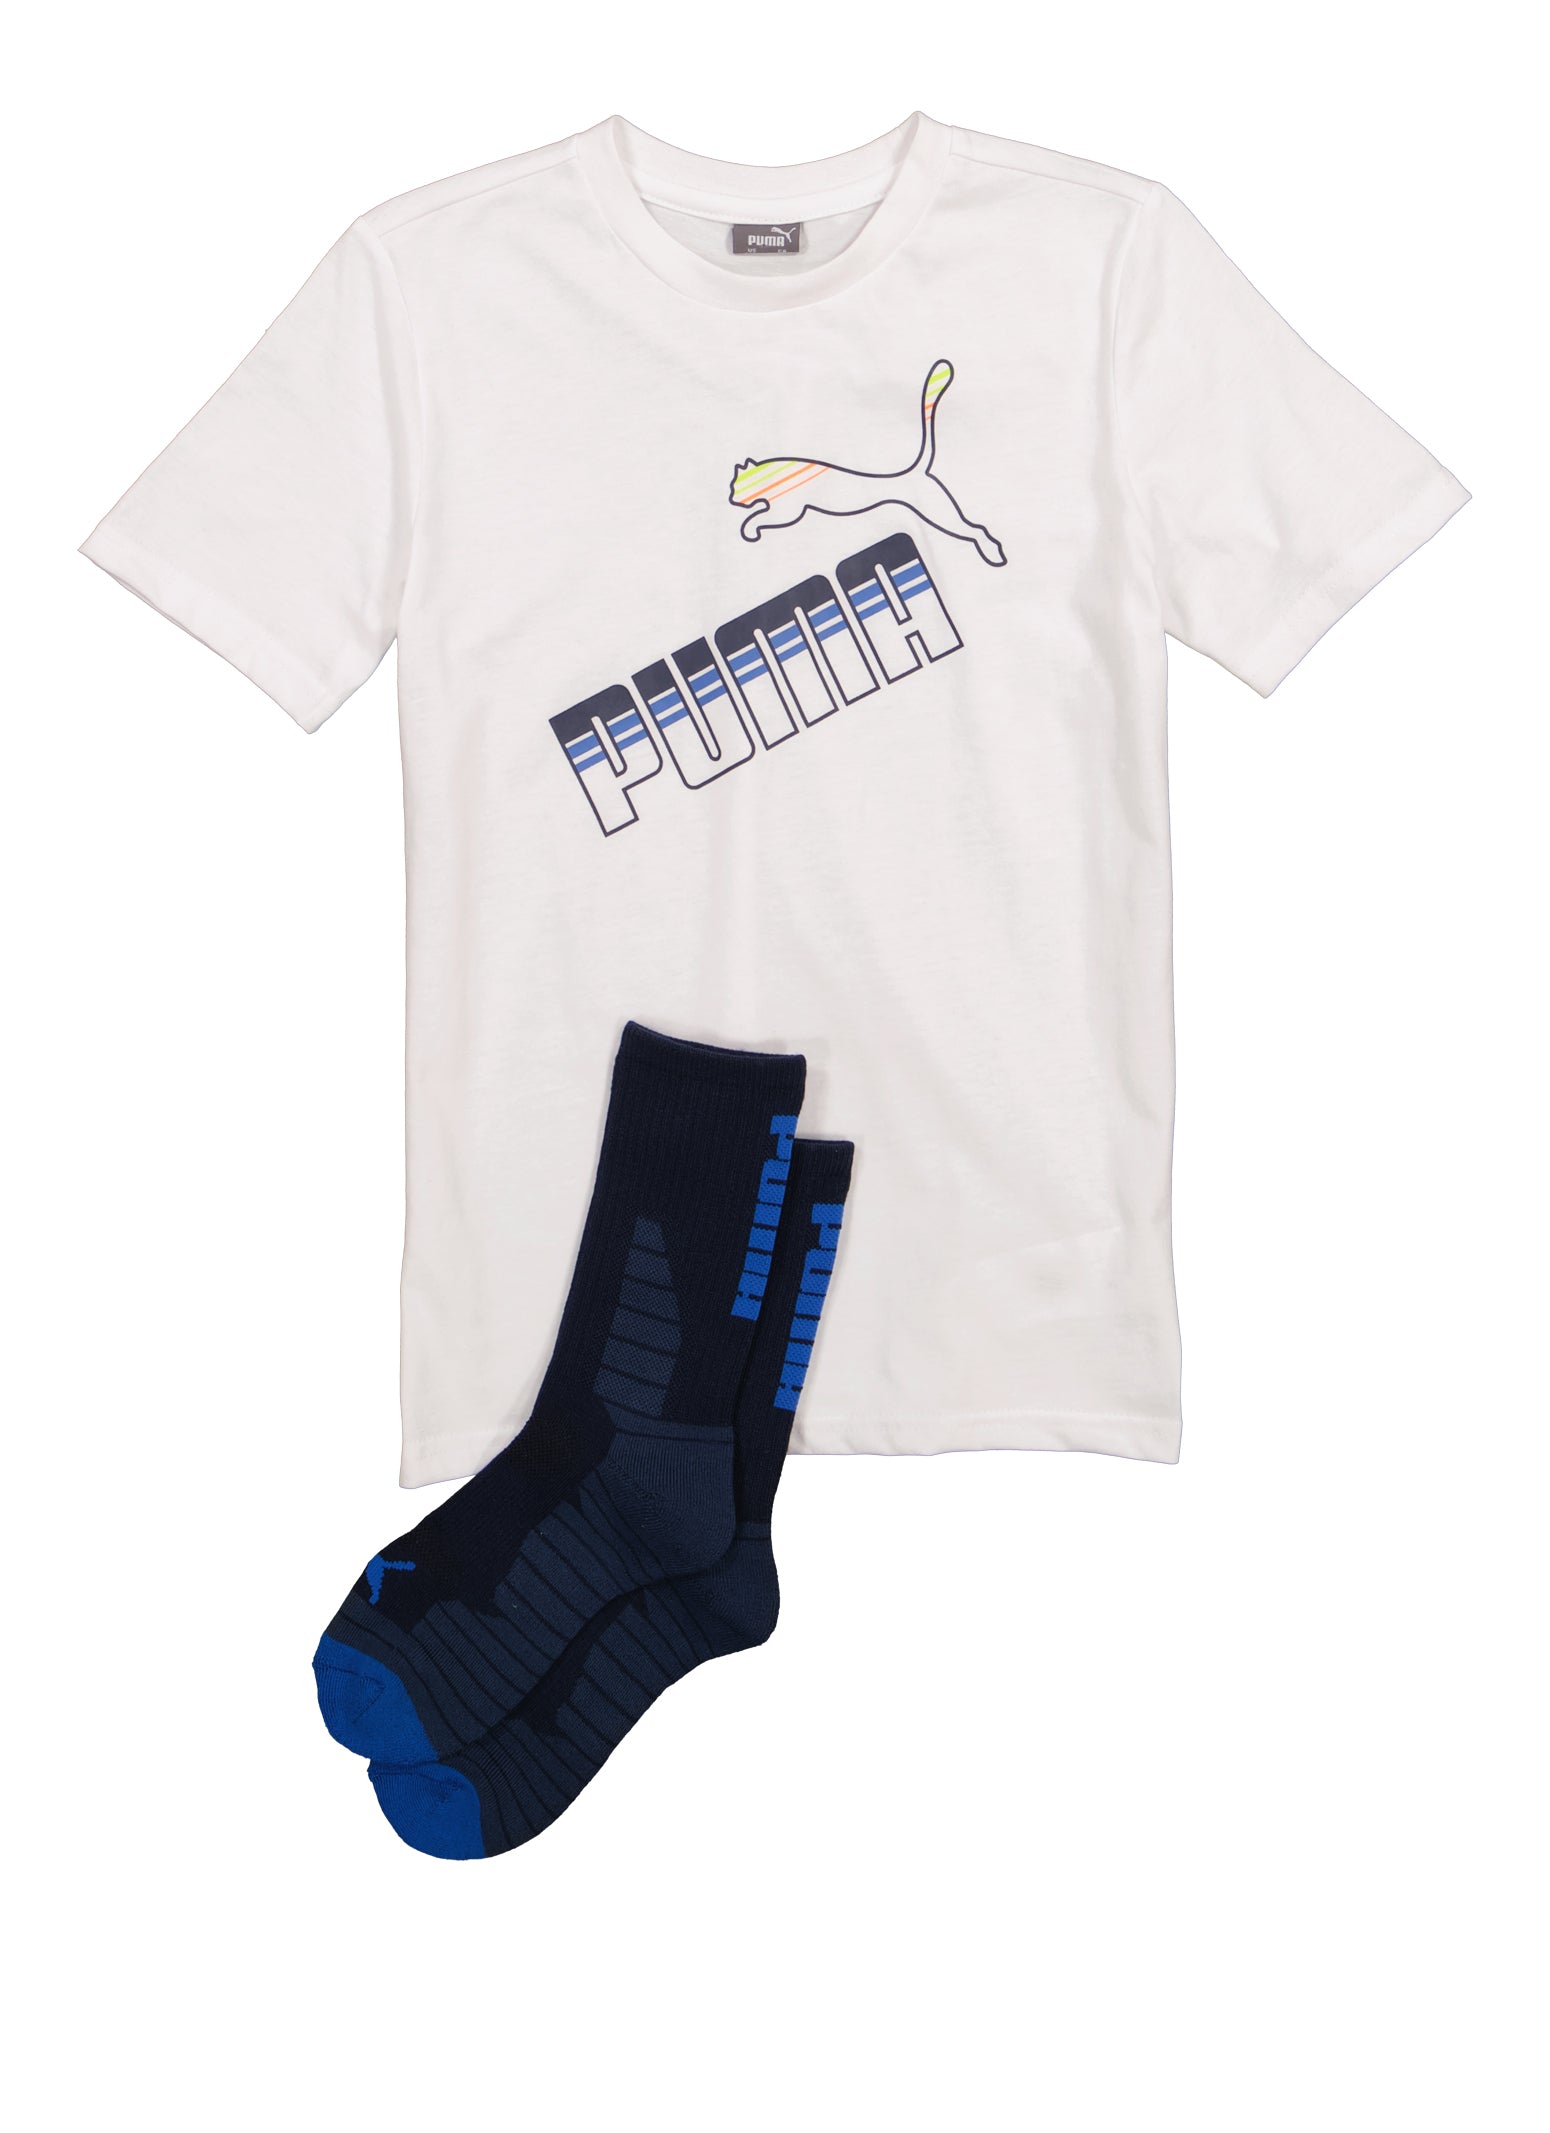 Boys Puma Striped Logo Graphic Tee and Socks, White,